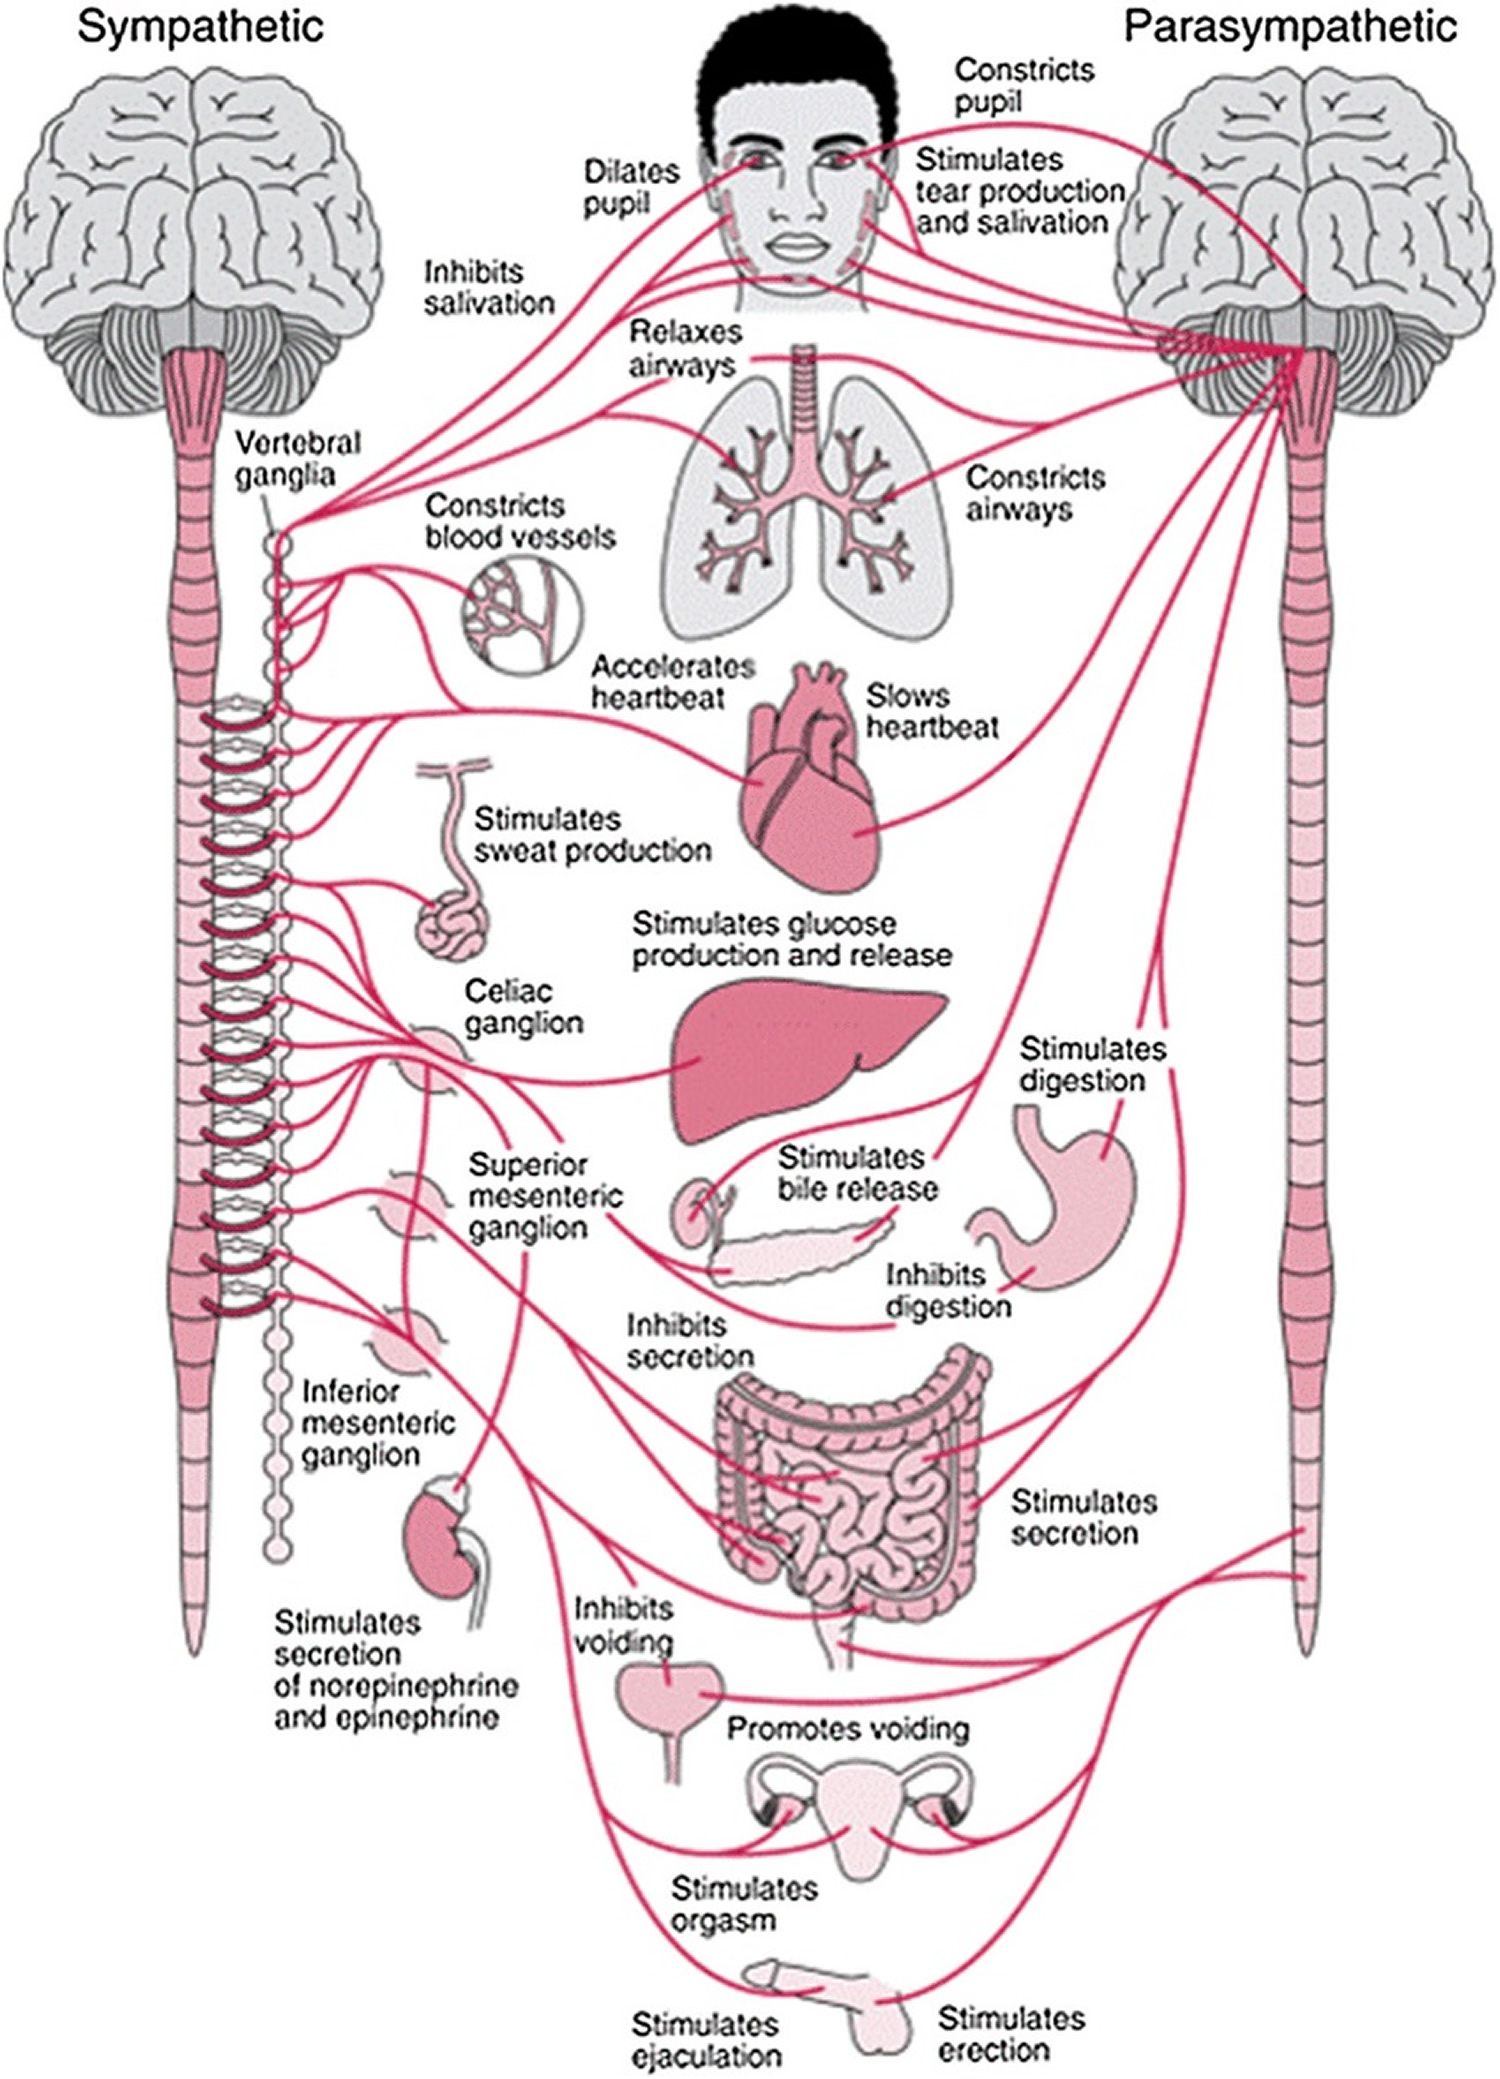 autonomic nervous system presentation